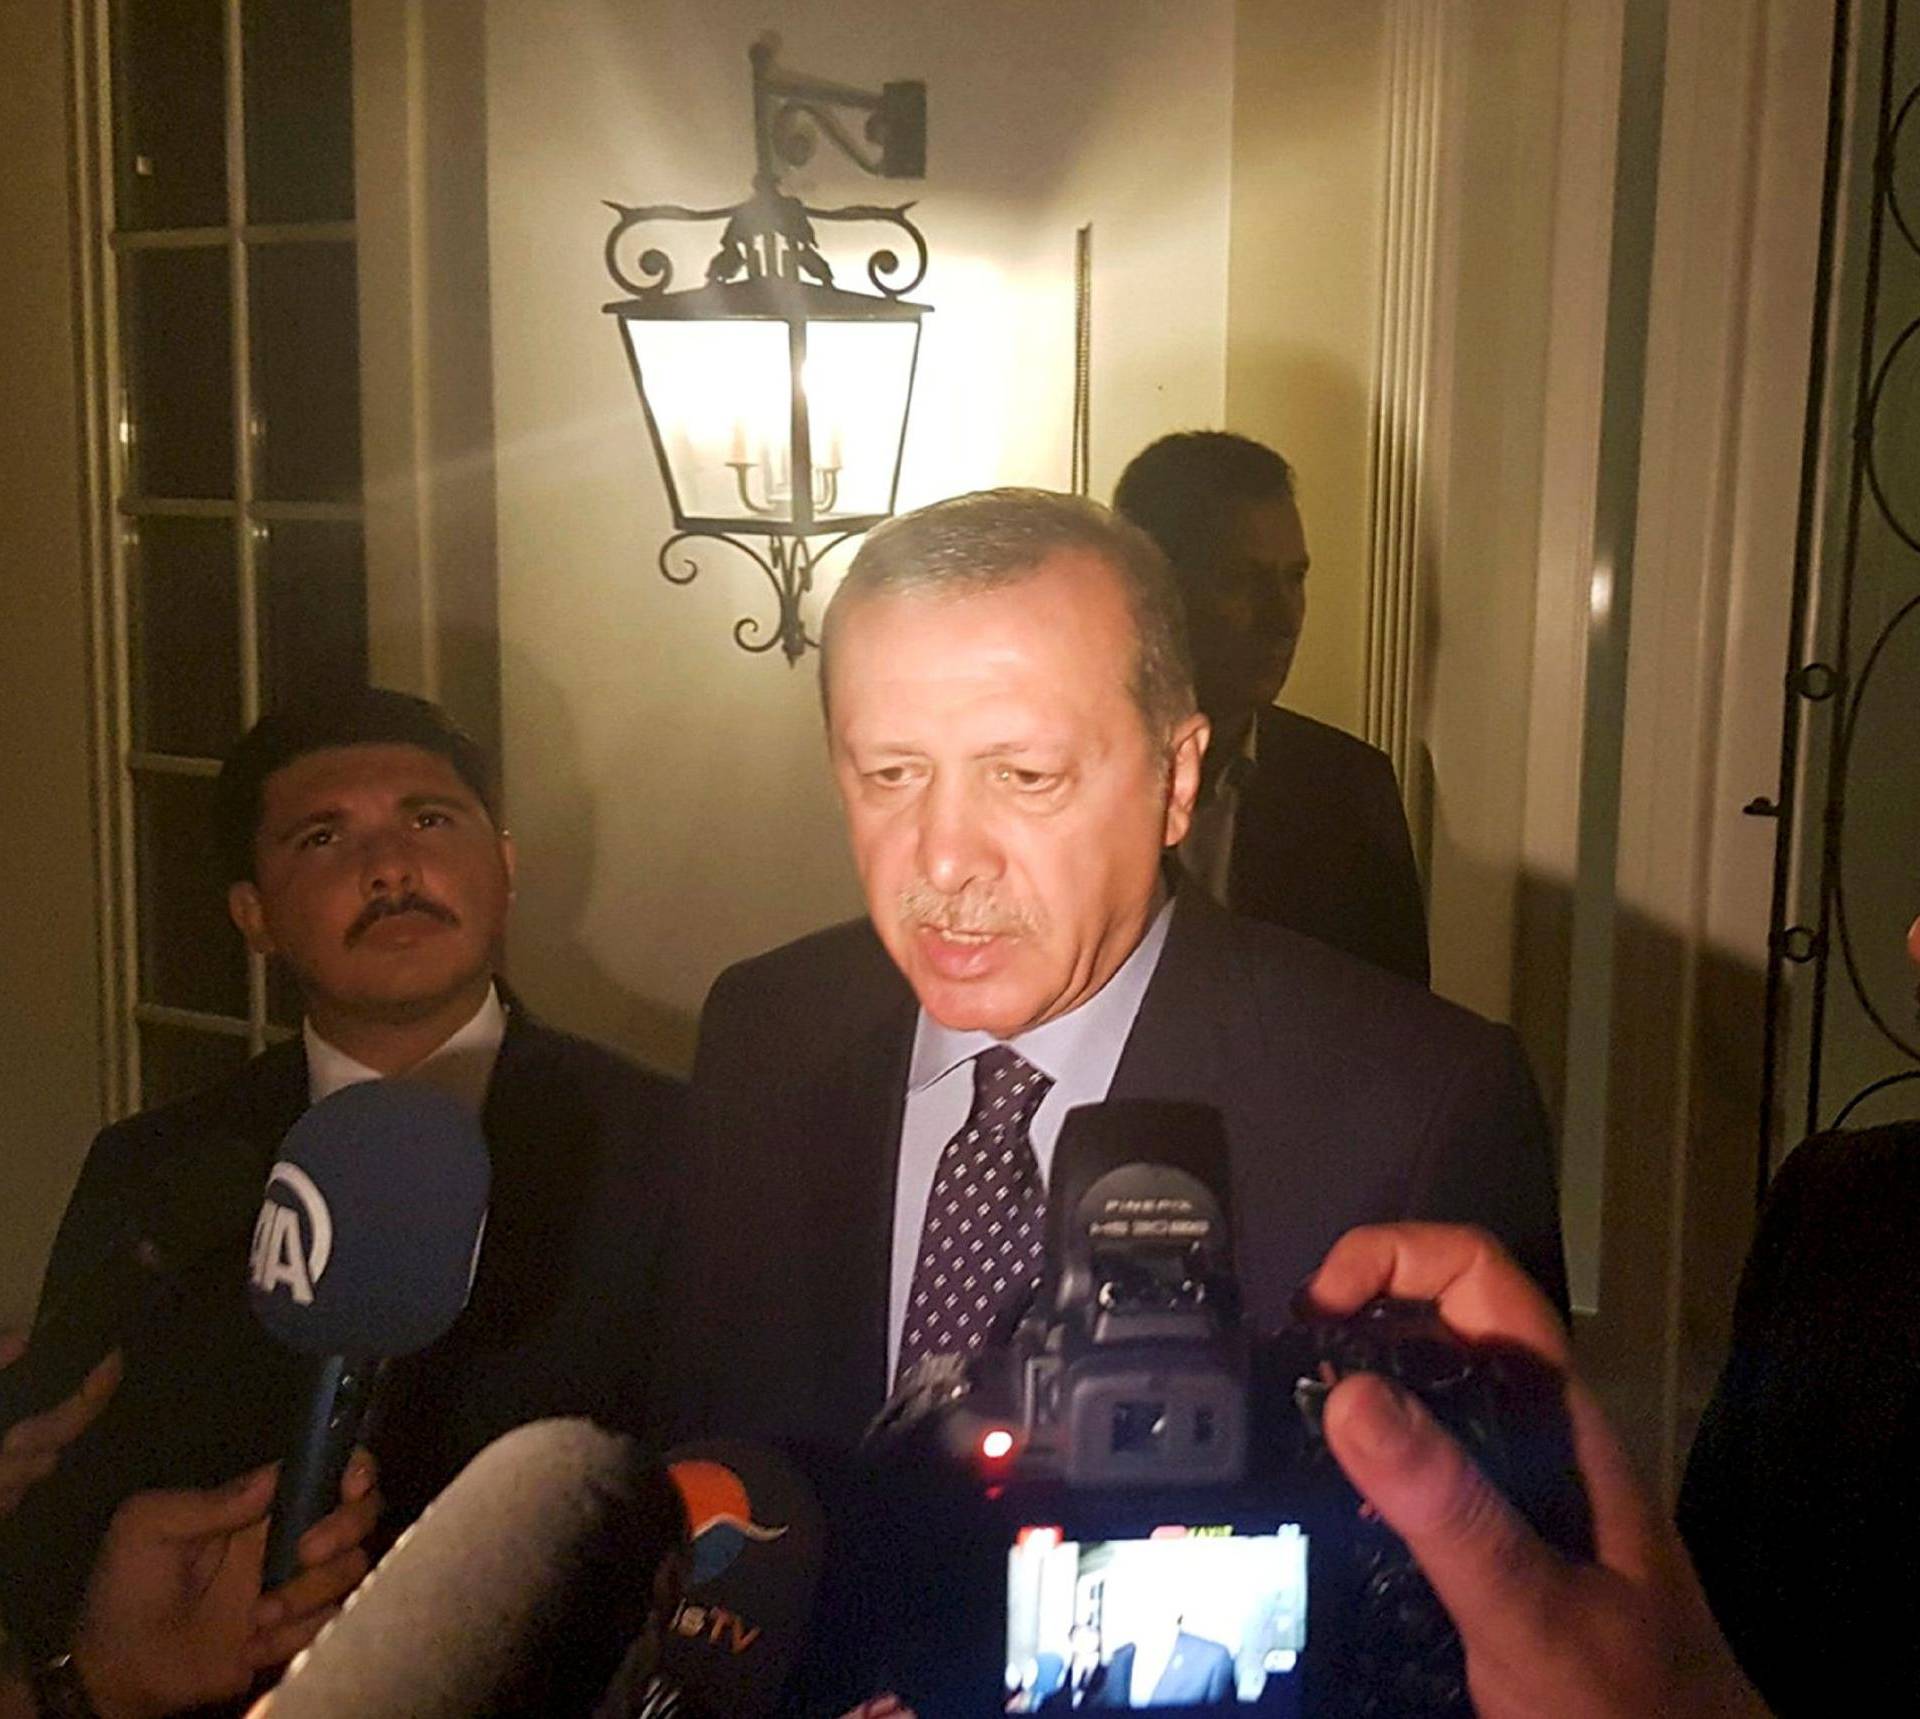 Turkish President Tayyip Erdogan speaks to media in the resort town of Marmaris